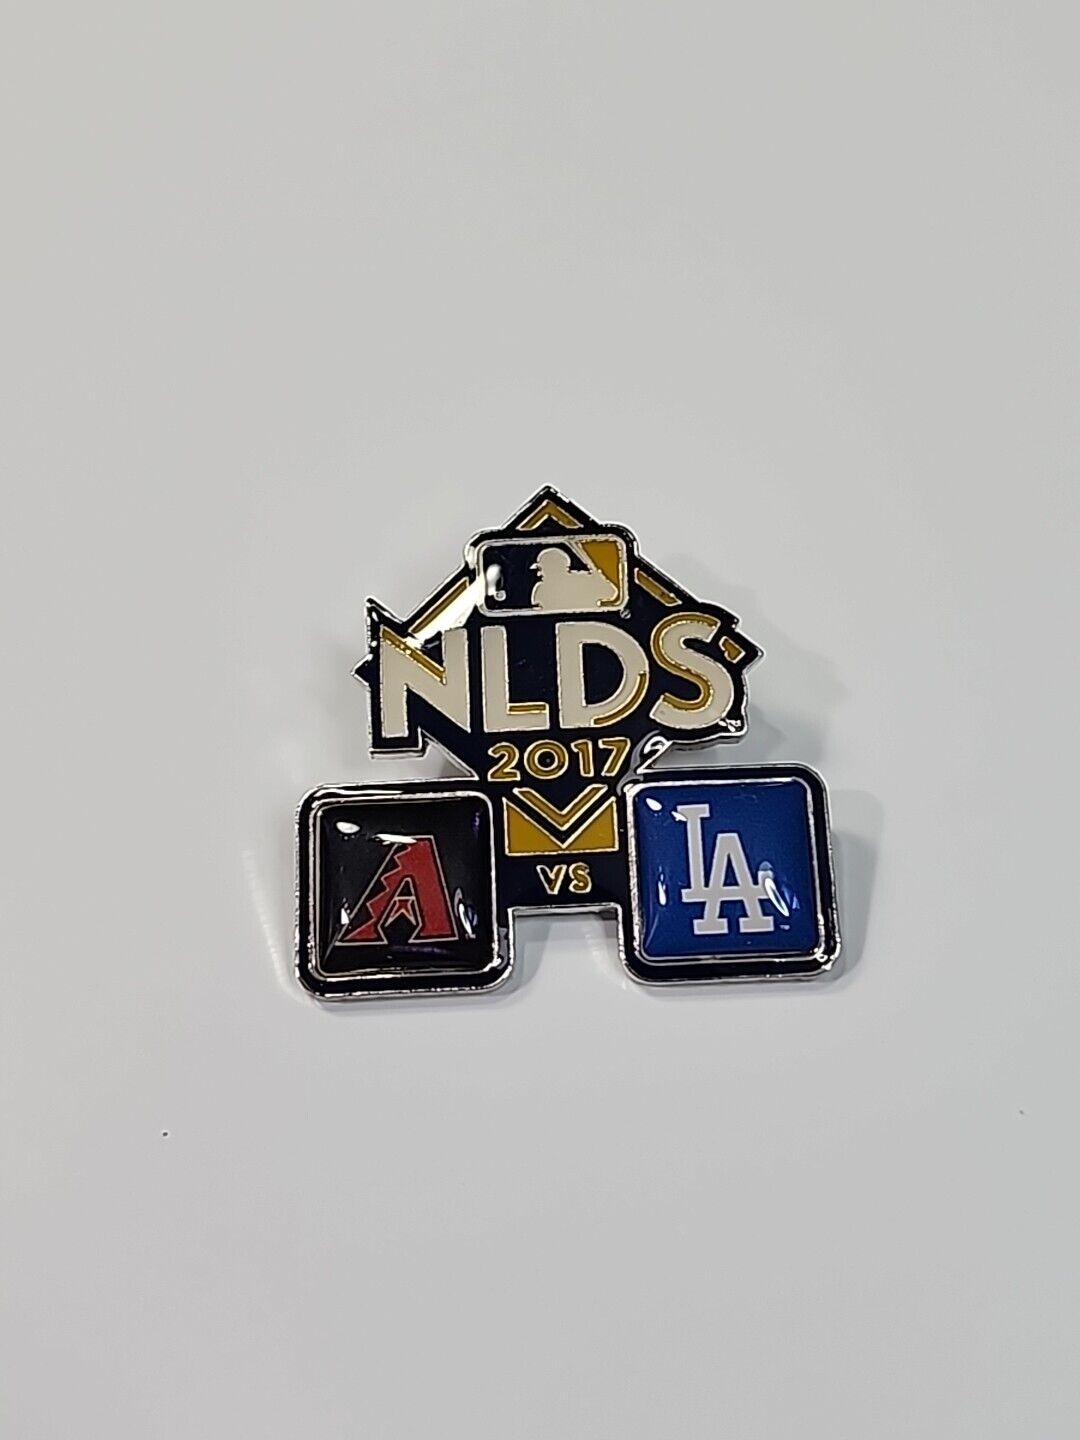 Arizona Diamondbacks vs Los Angeles Dodgers NLDS 2017 Souvenir Pin